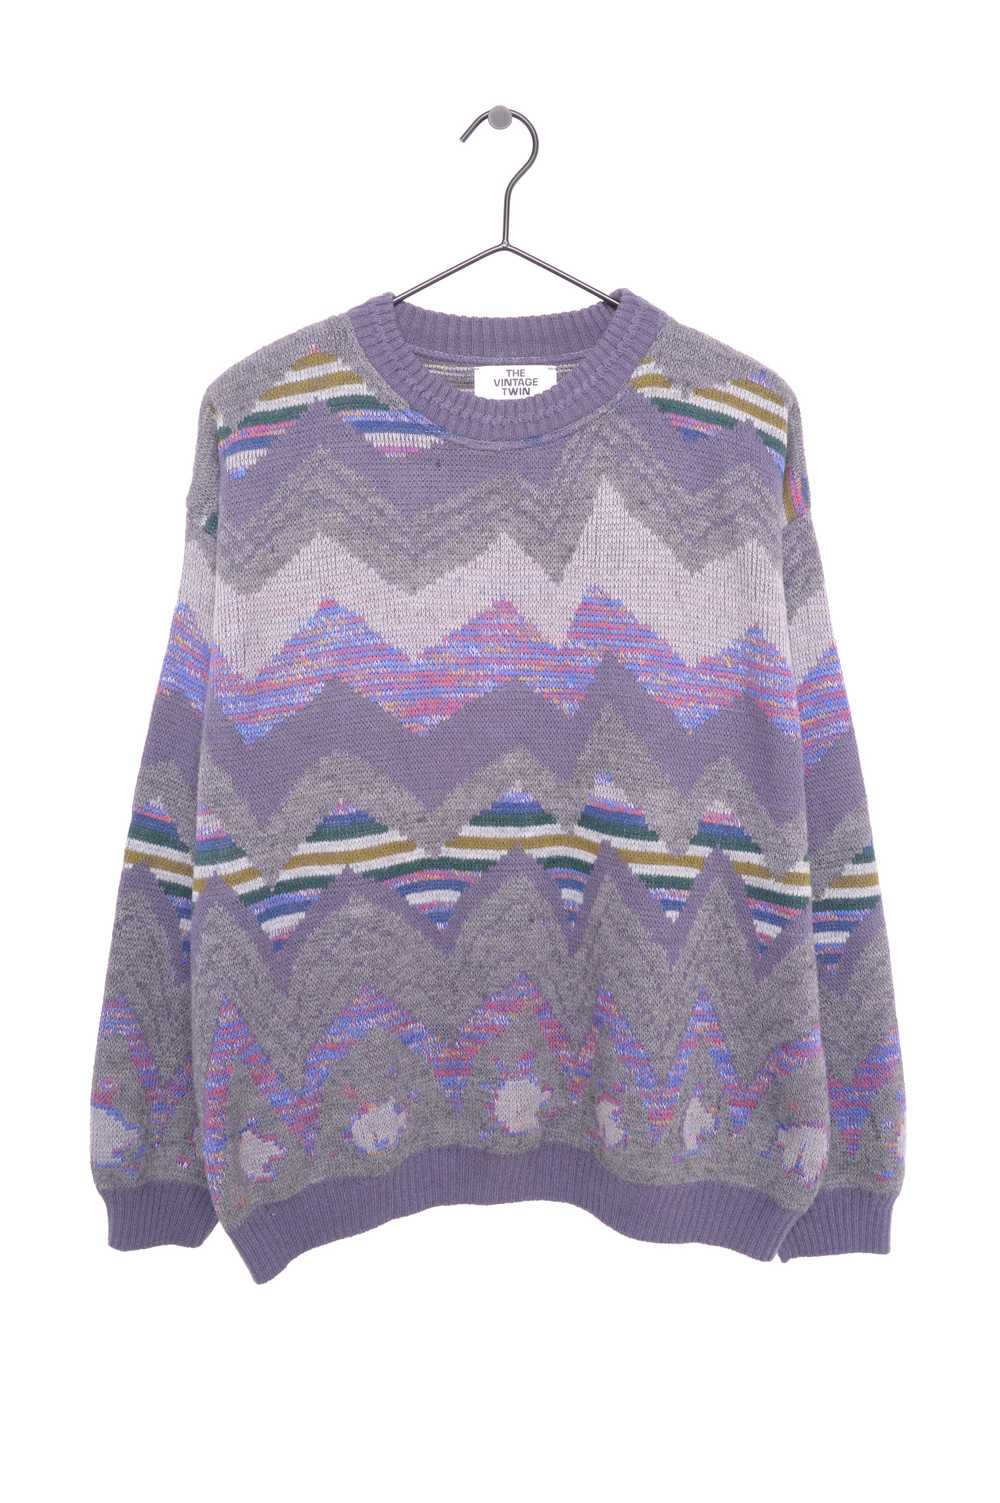 1990s Geometric Sweater - image 1